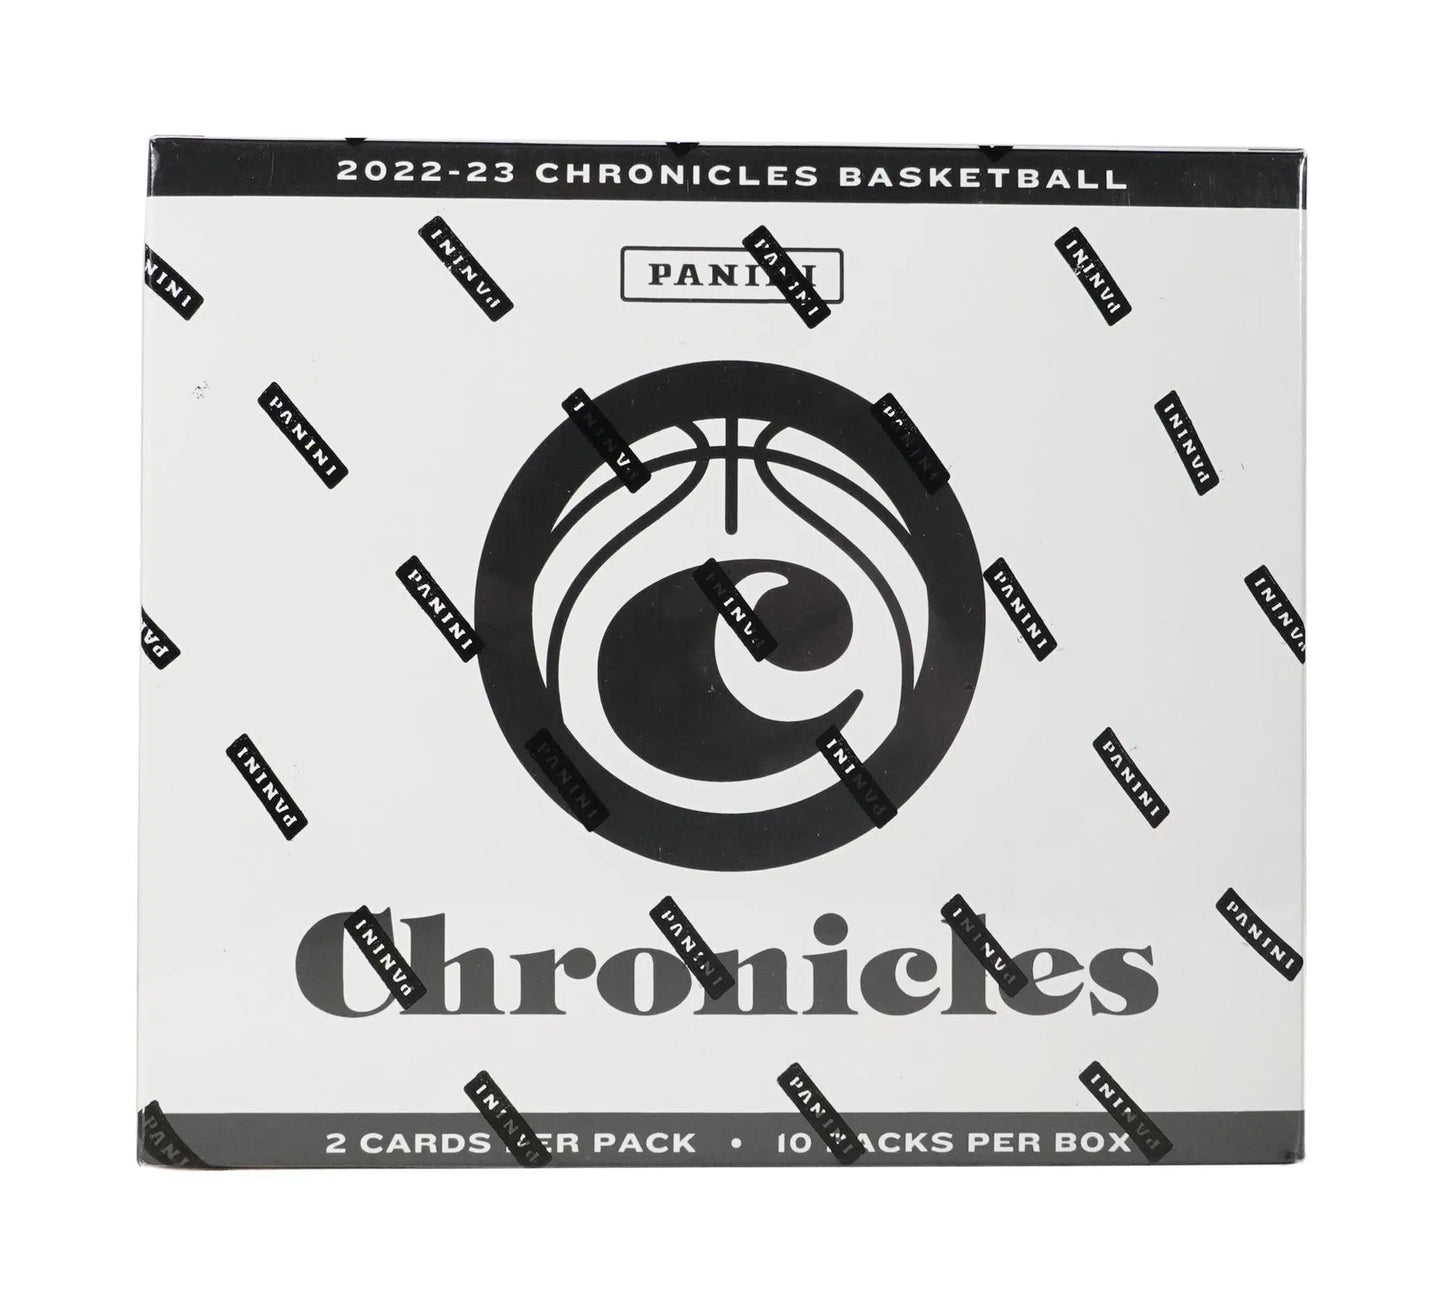 2022/23 Panini Chronicles Basketball Lucky Envelopes 10-Pack Box